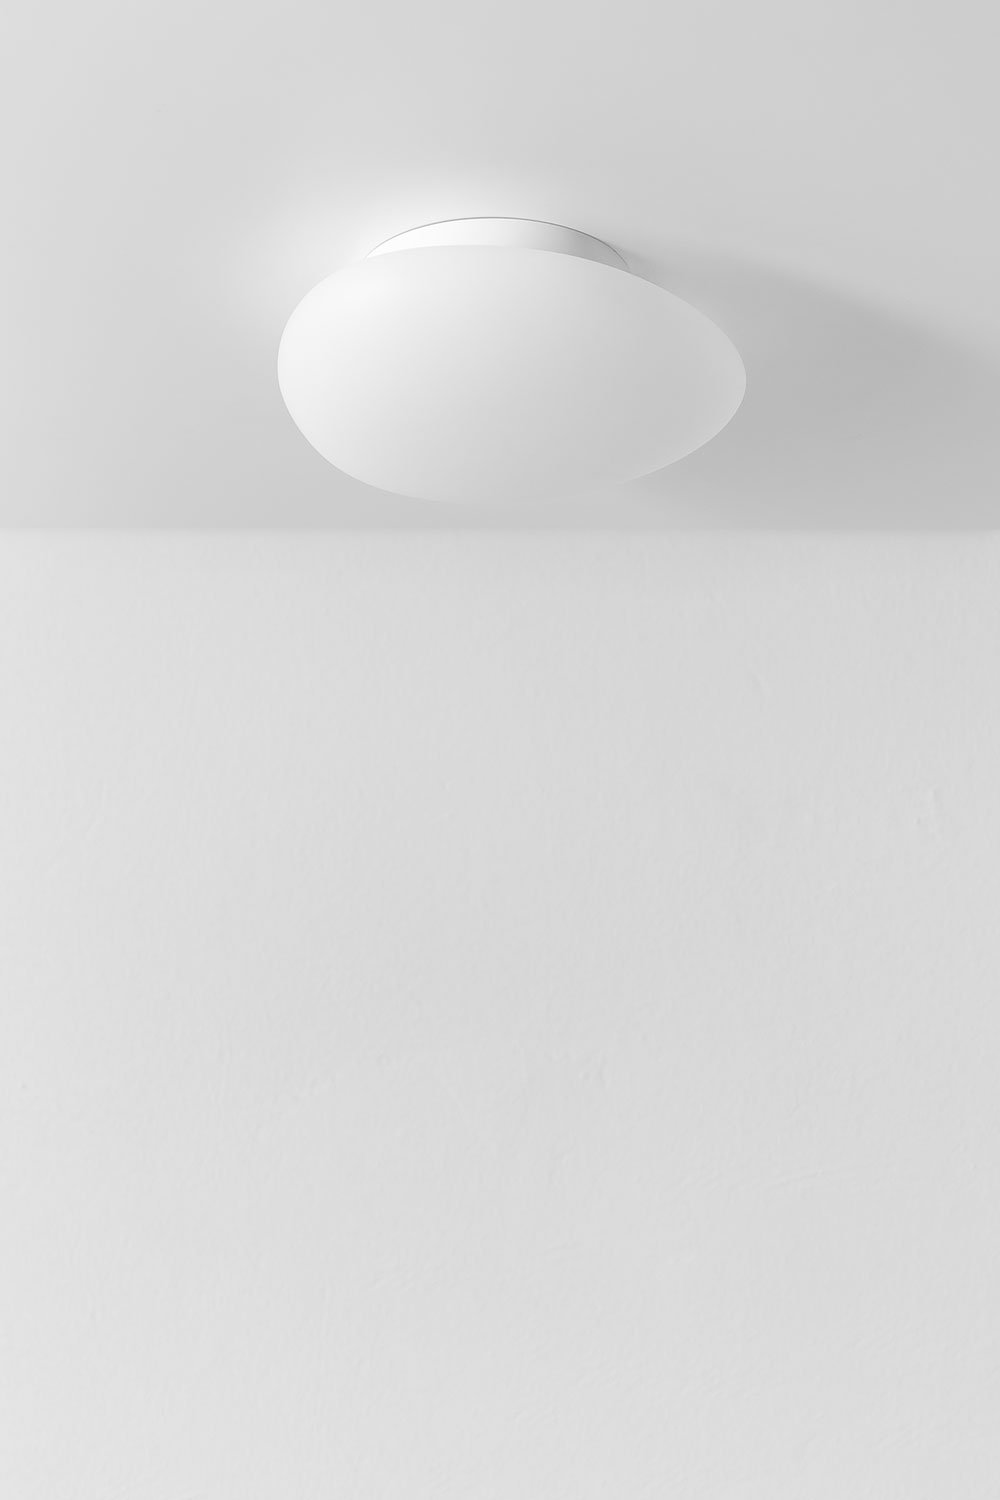 Maksim-plafondlamp , galerij beeld 1